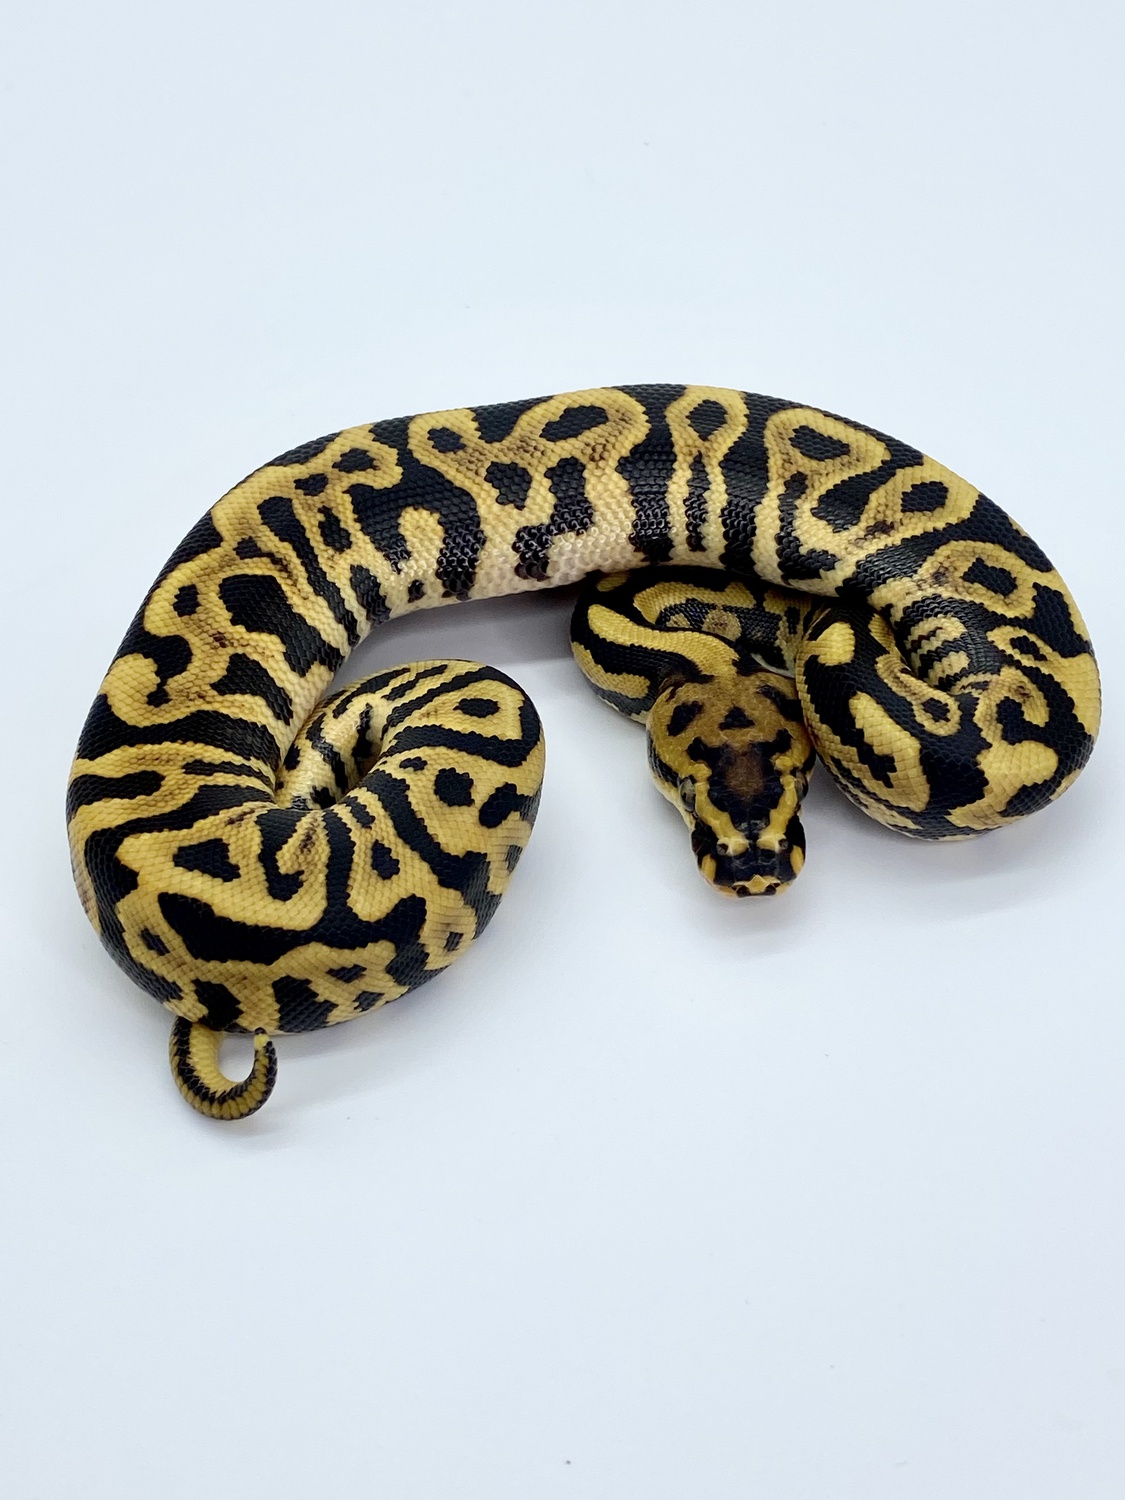 Spotnose Leopard Yellowbelly Or Spark Het Clown Ball Python by Redline Pythons